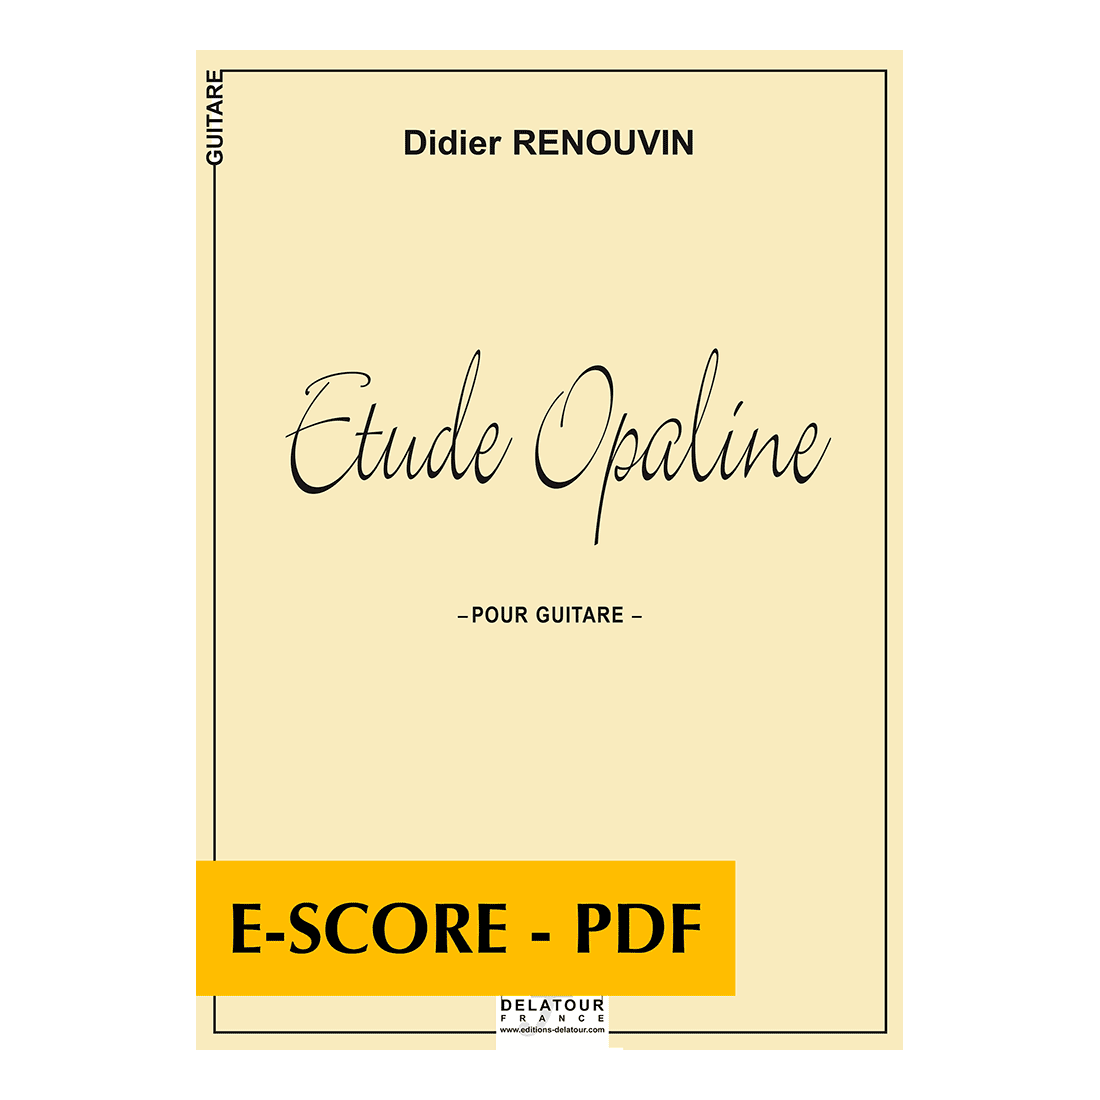 Etude opaline for guitar - E-score PDF